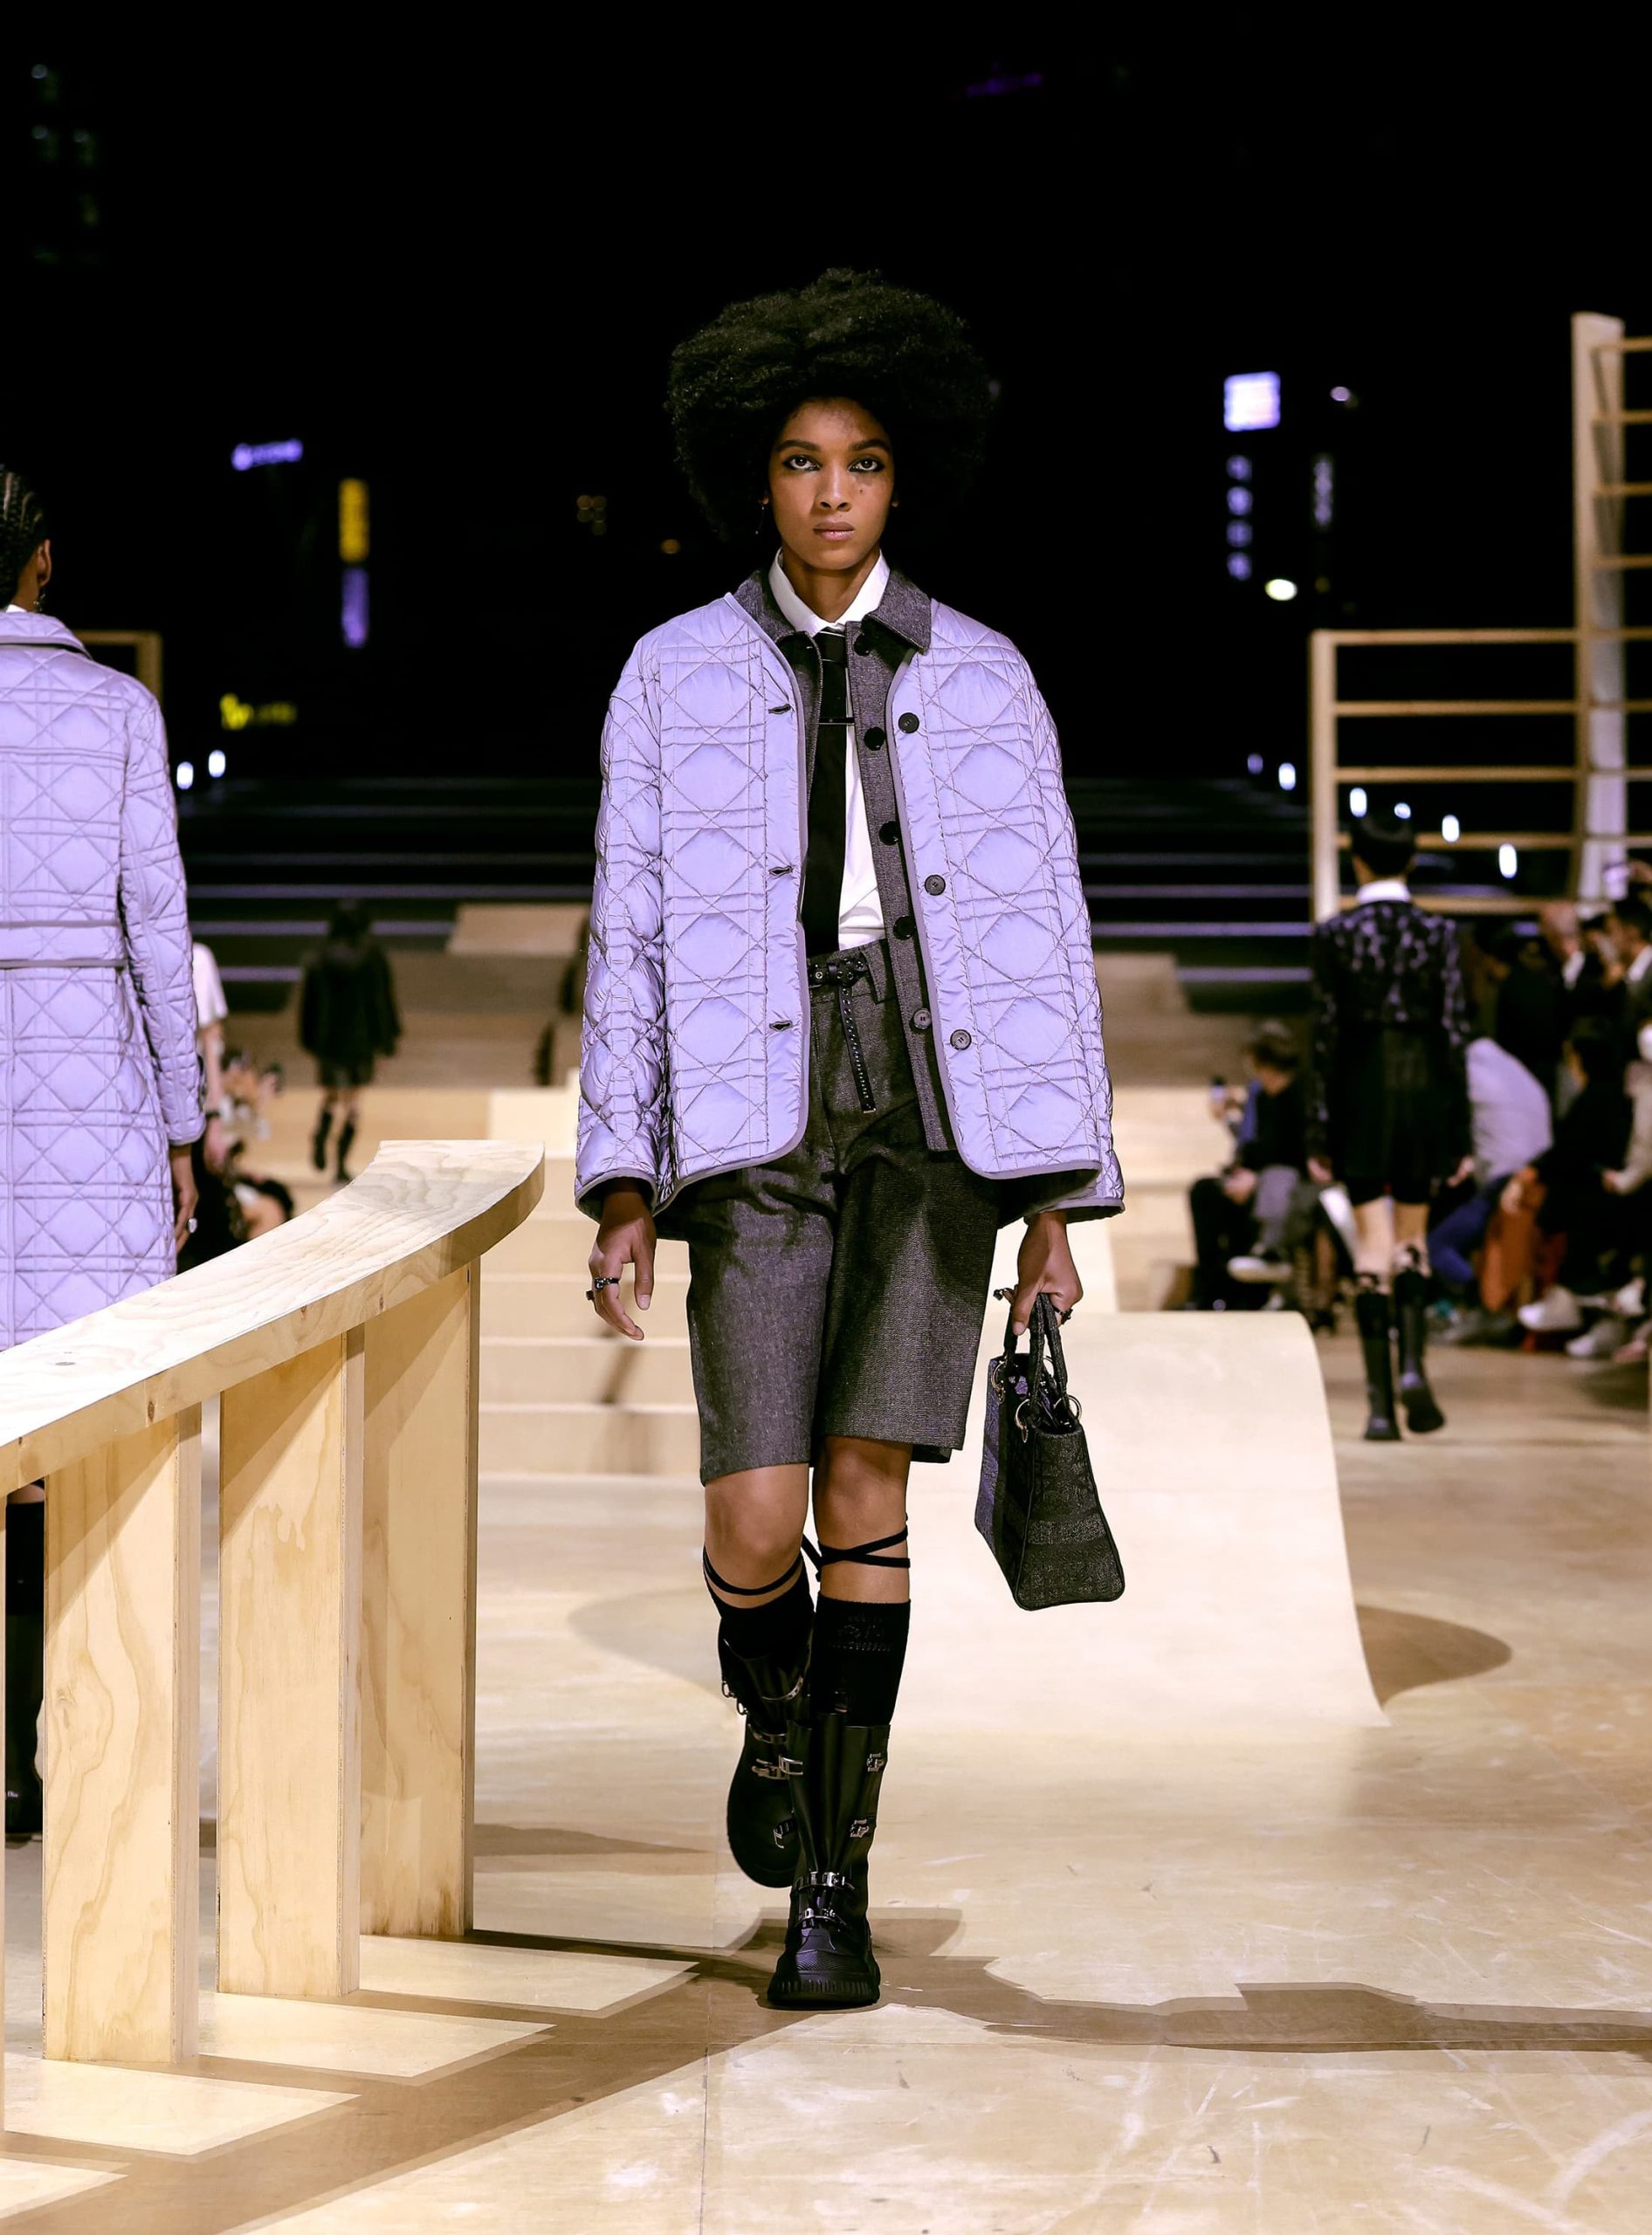 Dior's Fall 2022 Show Marks The Brand's Eye On South Korea's Rising Showbiz